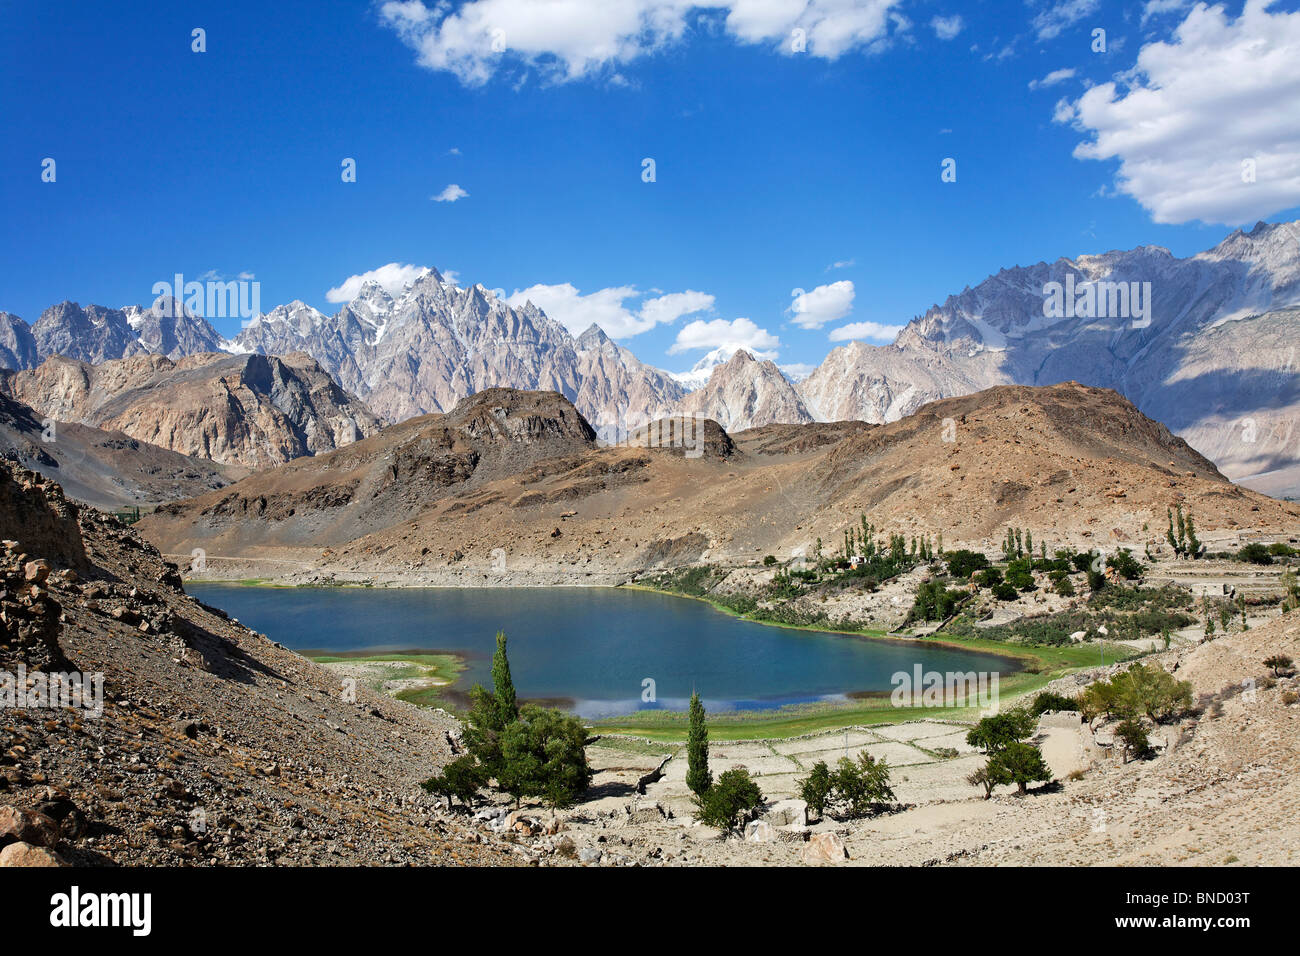 Berith lago y montañas, Passu, Hunza Valley, Karakorum, Pakistán Foto de stock